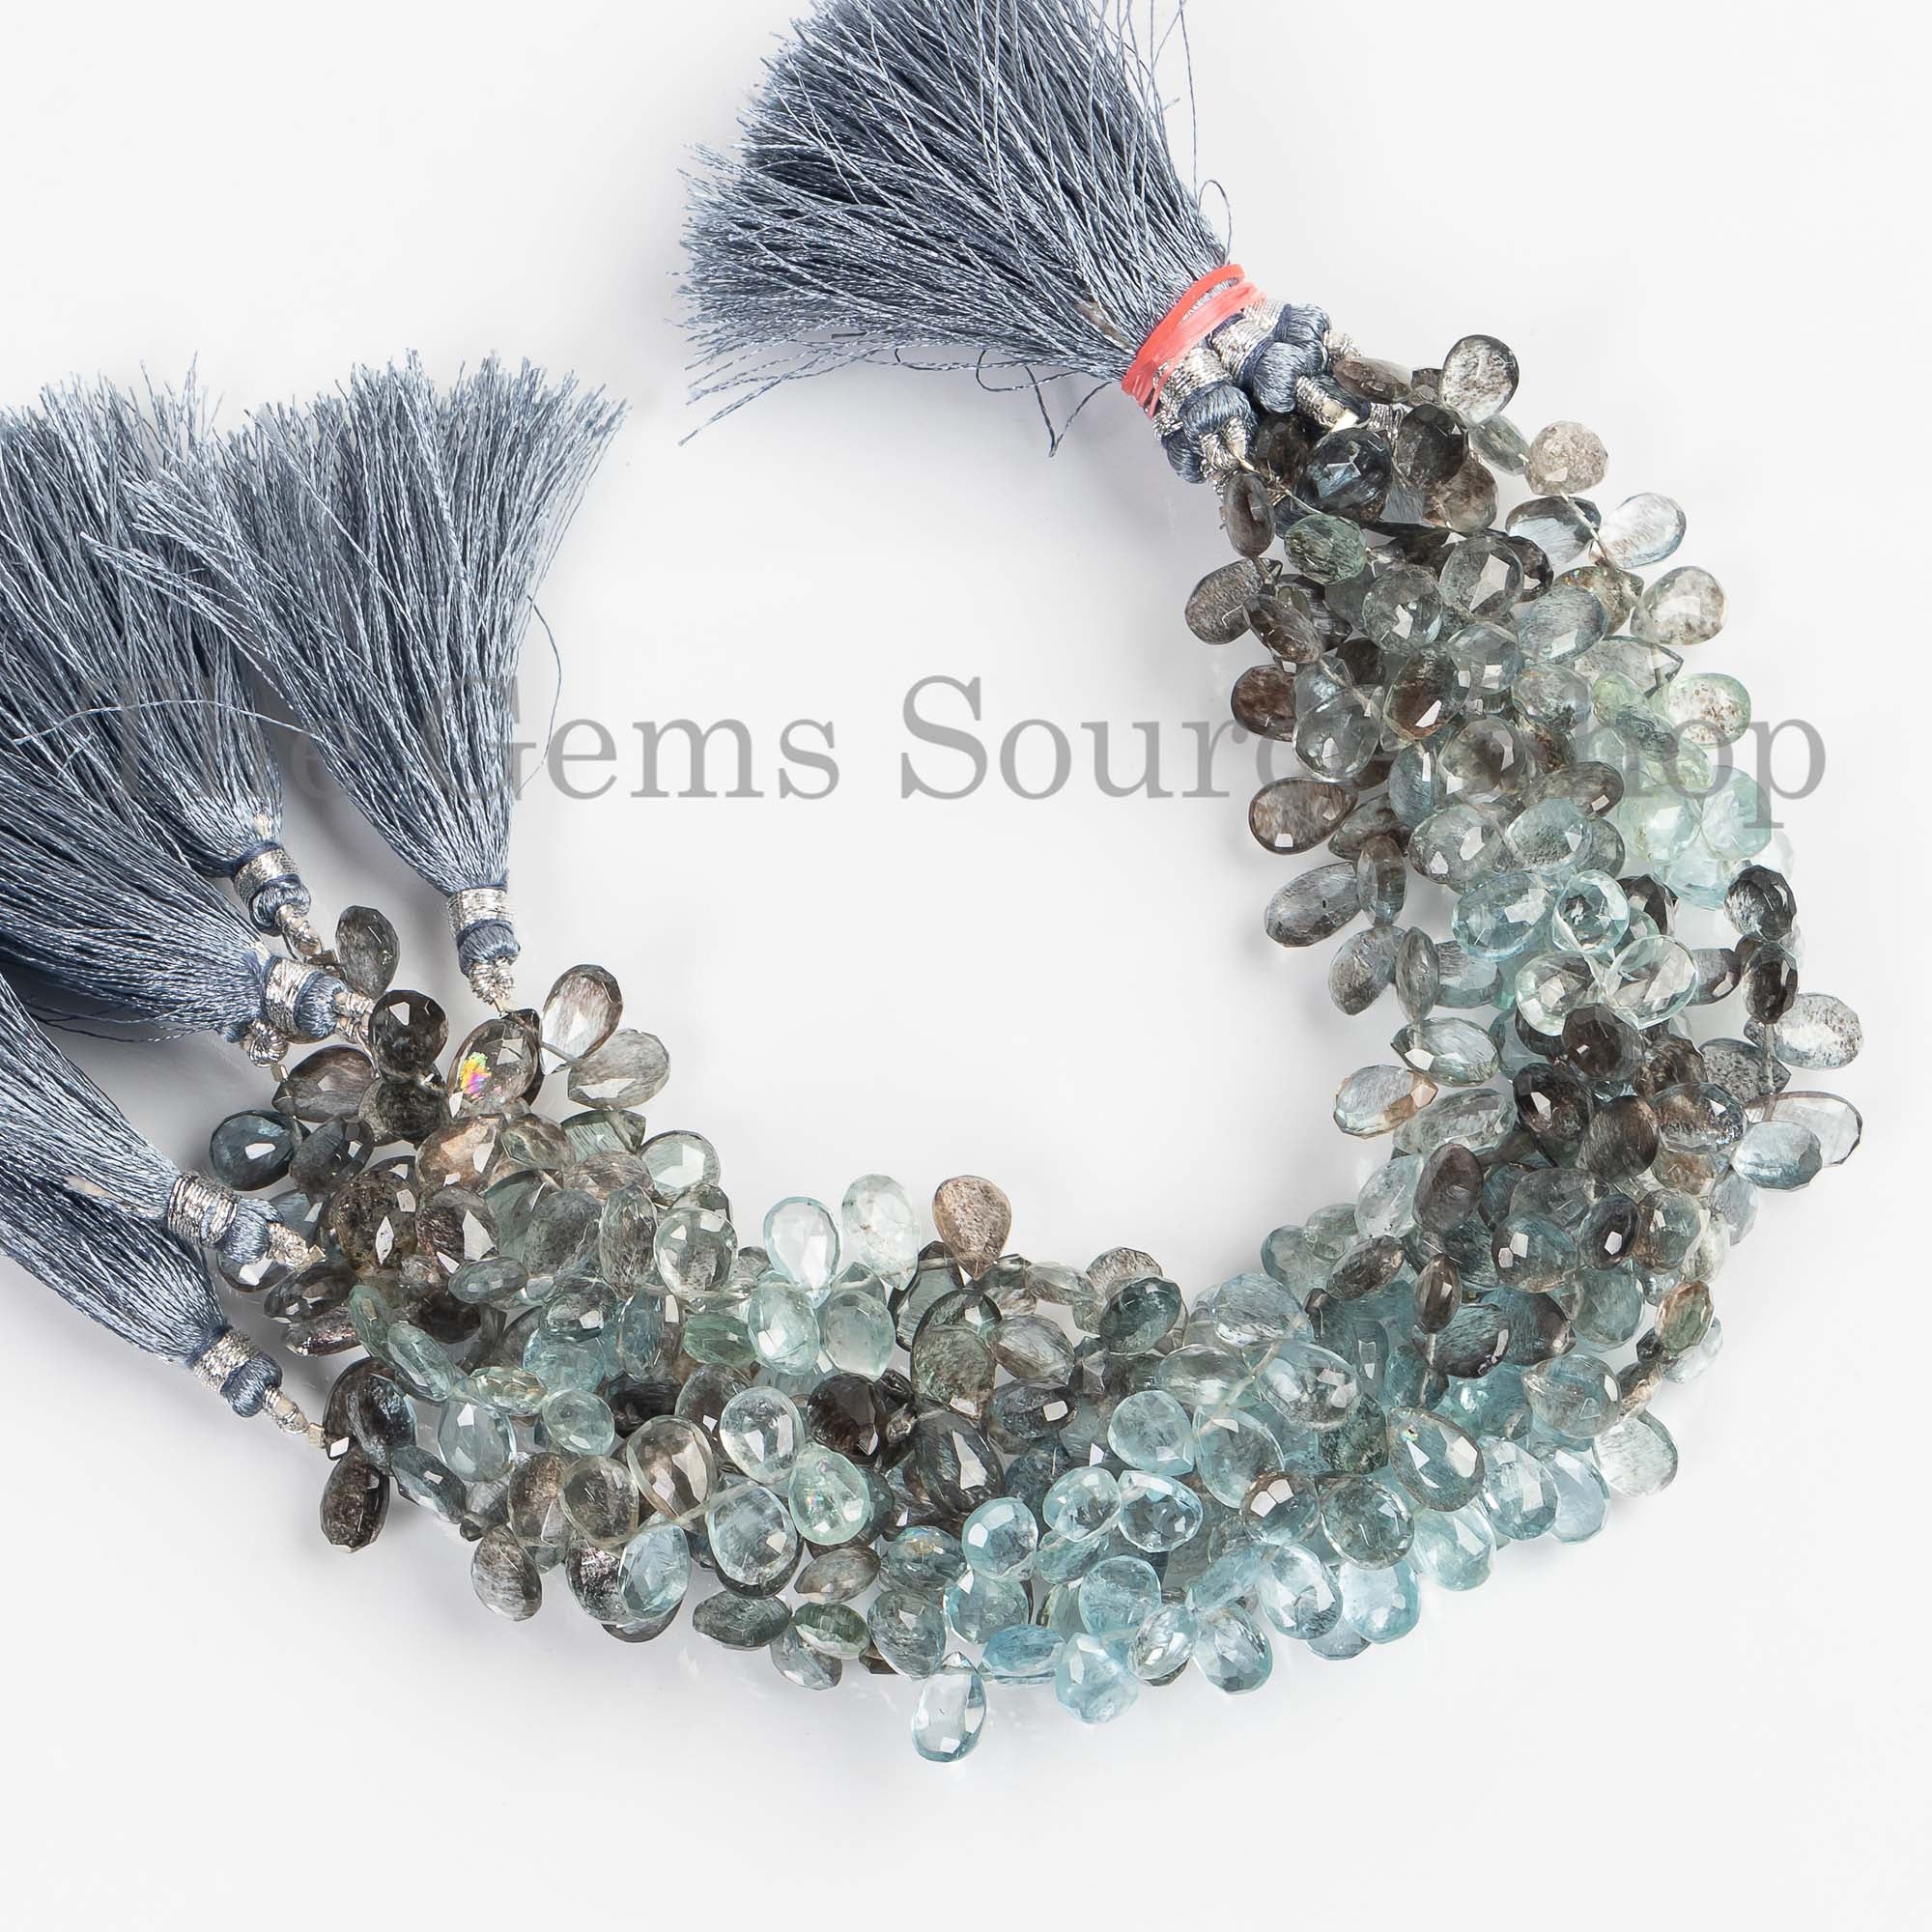 Rare Aquamarine Sunstone Pear Beads, 6x9-6.5x10.5mm Top Quality Aquamarine Beads, Pear Briolette, Aquamarine Sunstone Faceted Beads